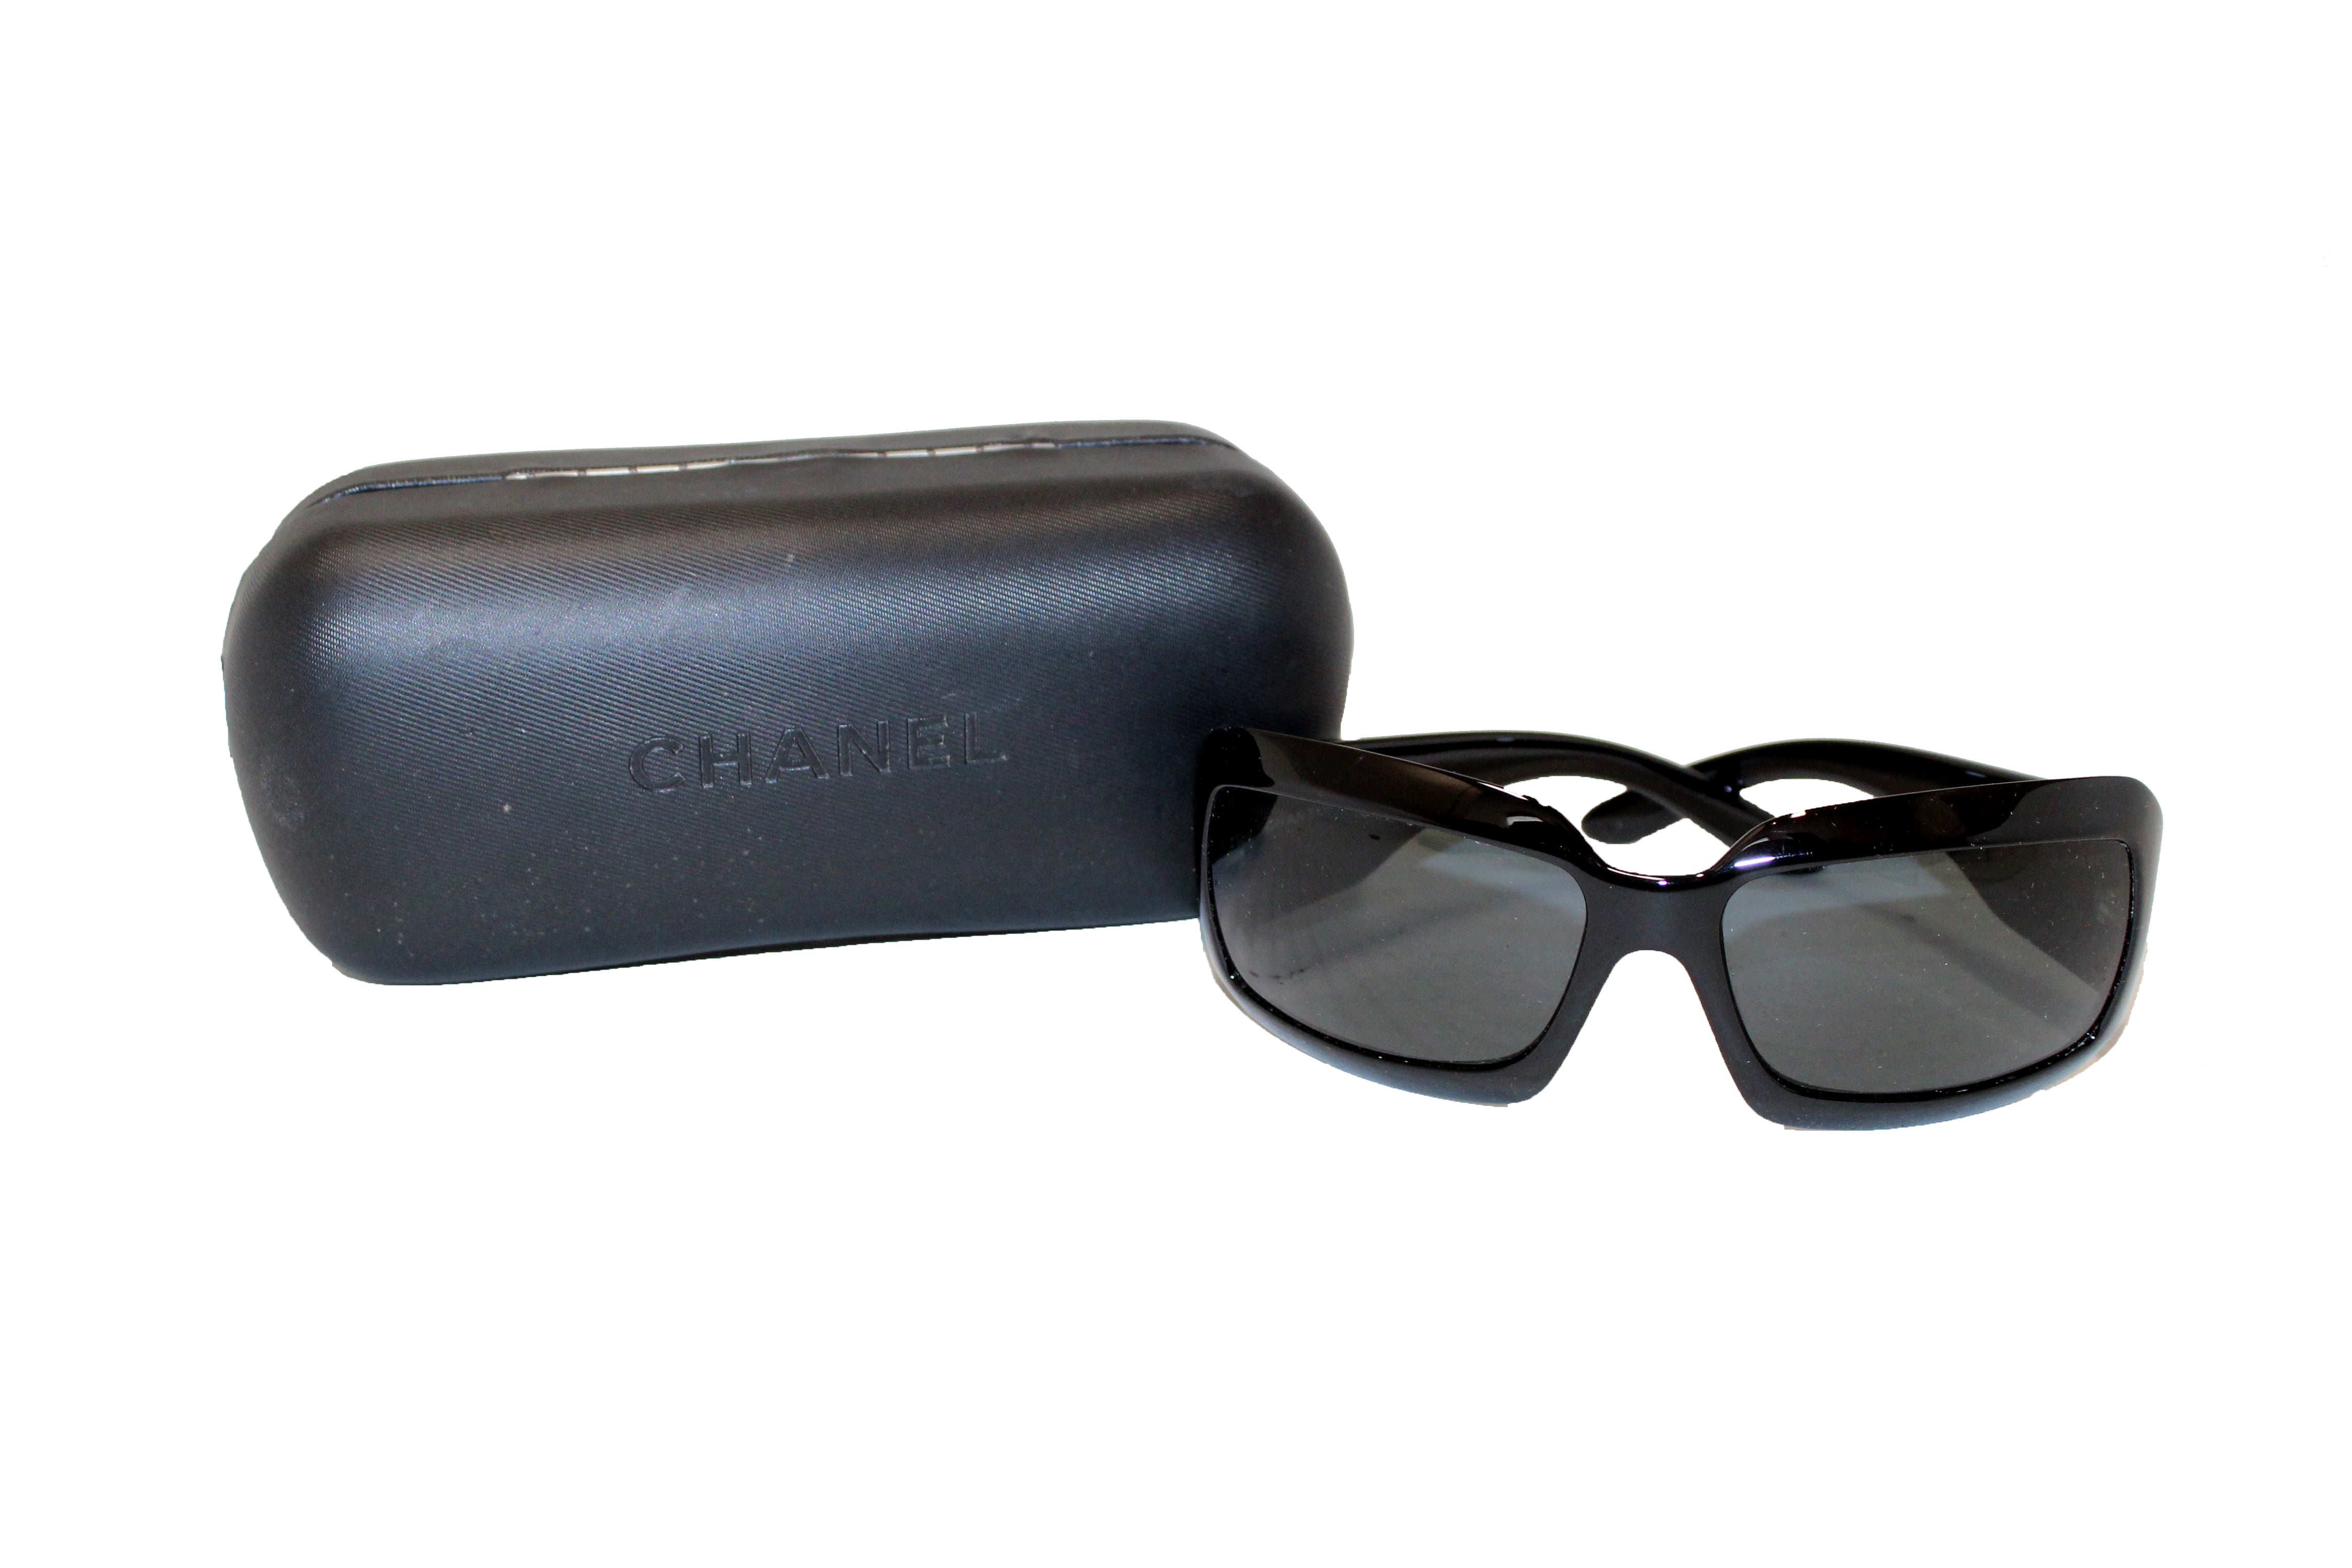 chanel sunglasses 5076-